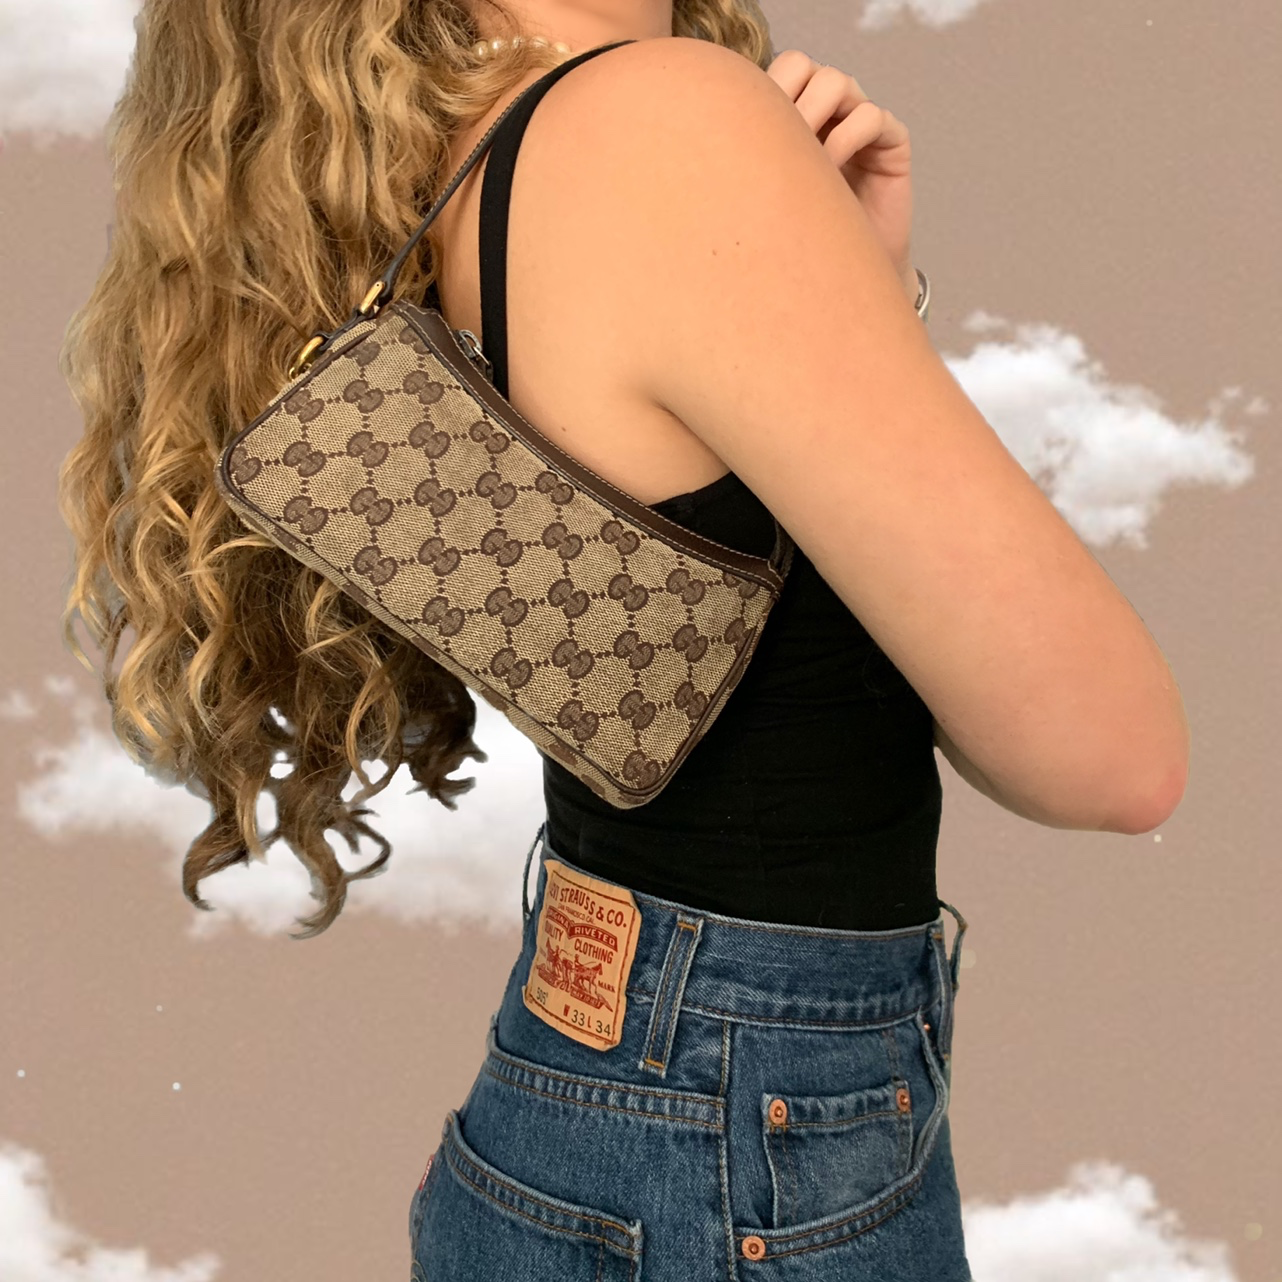 Sell Gucci Monogram Mini Pochette Bag - Brown